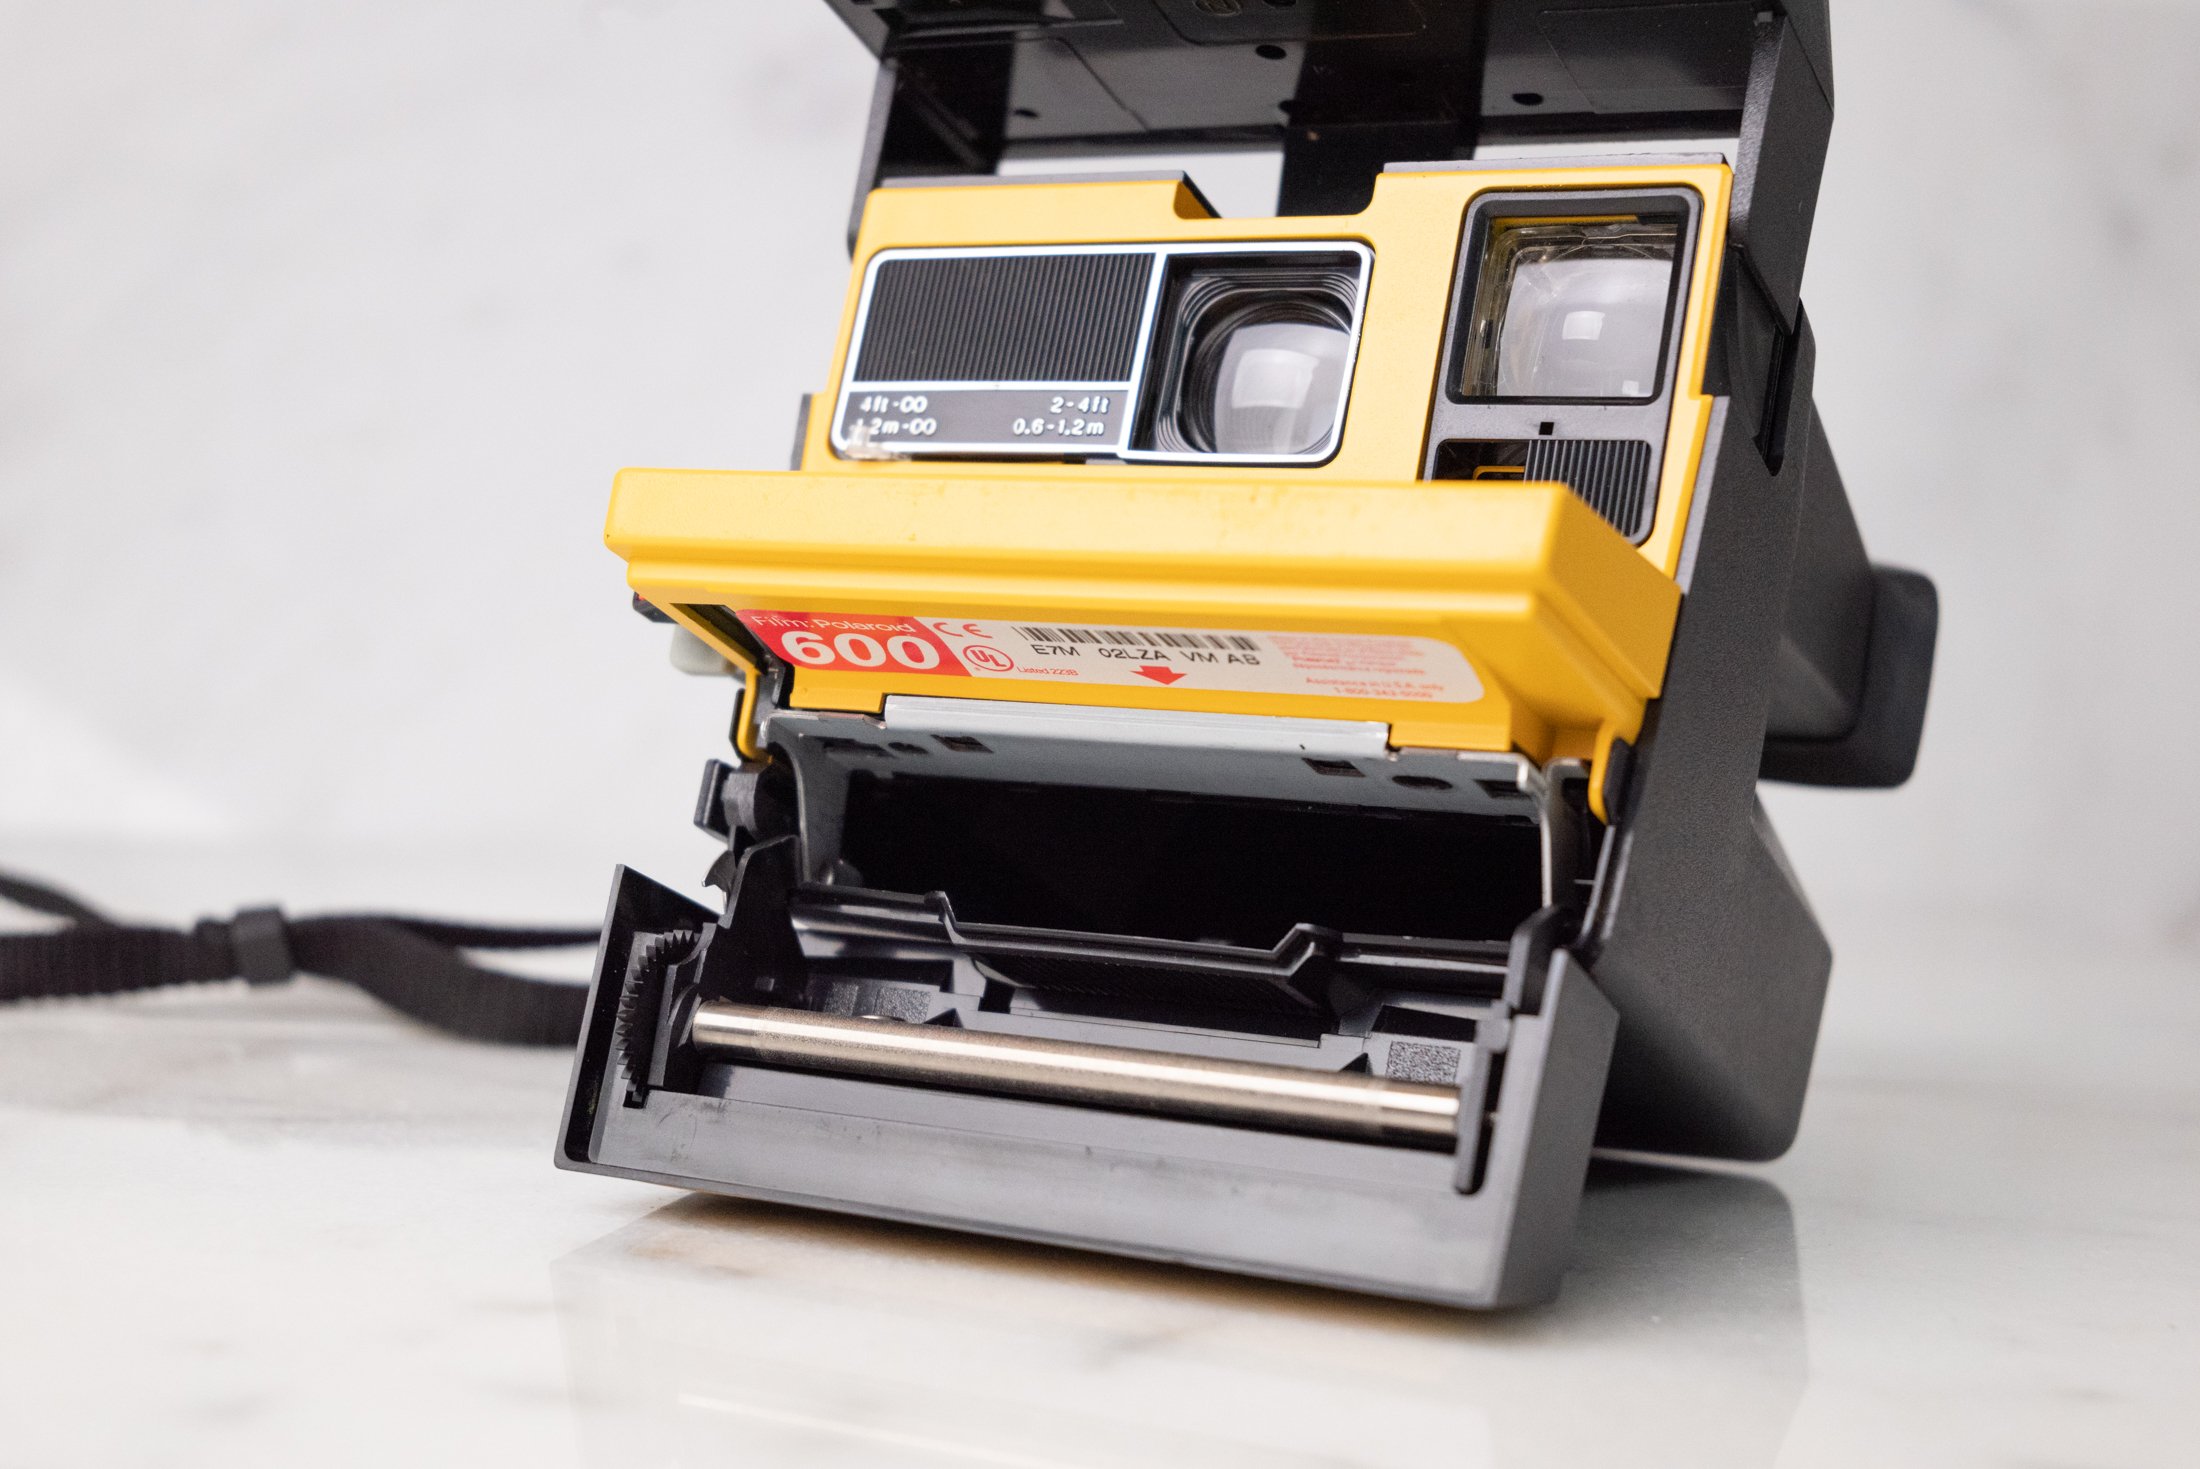 Buy Polaroid Film, Cameras, And Gear